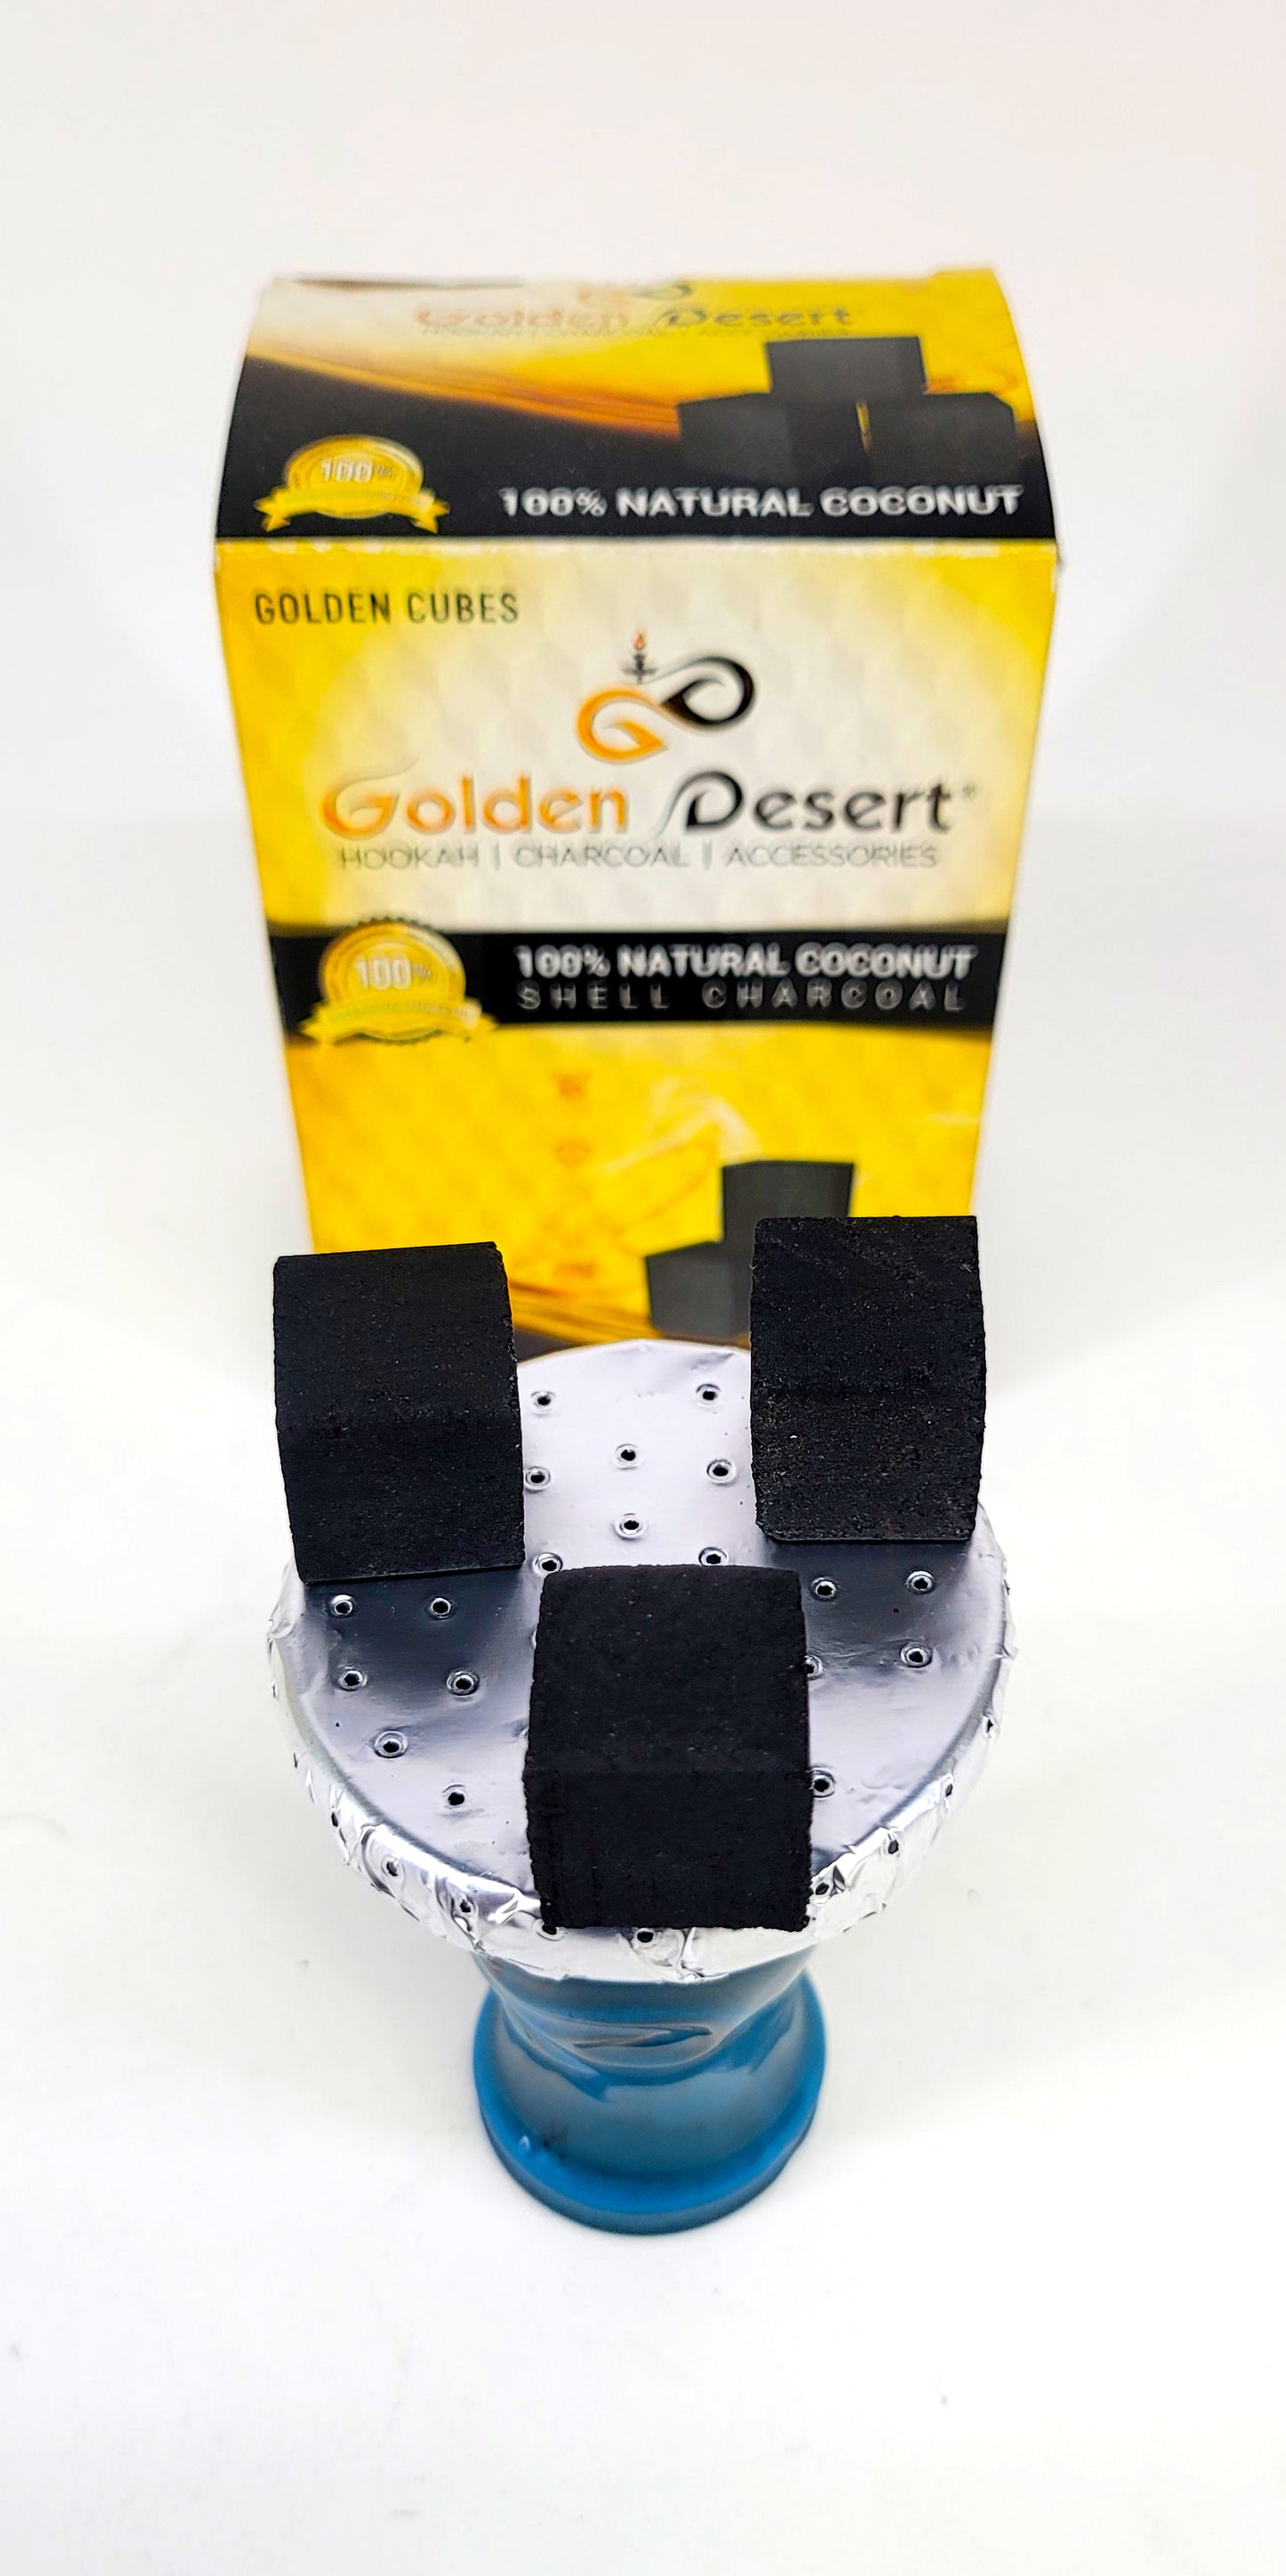 Golden Desert 1 kg cube box coconut charcoal